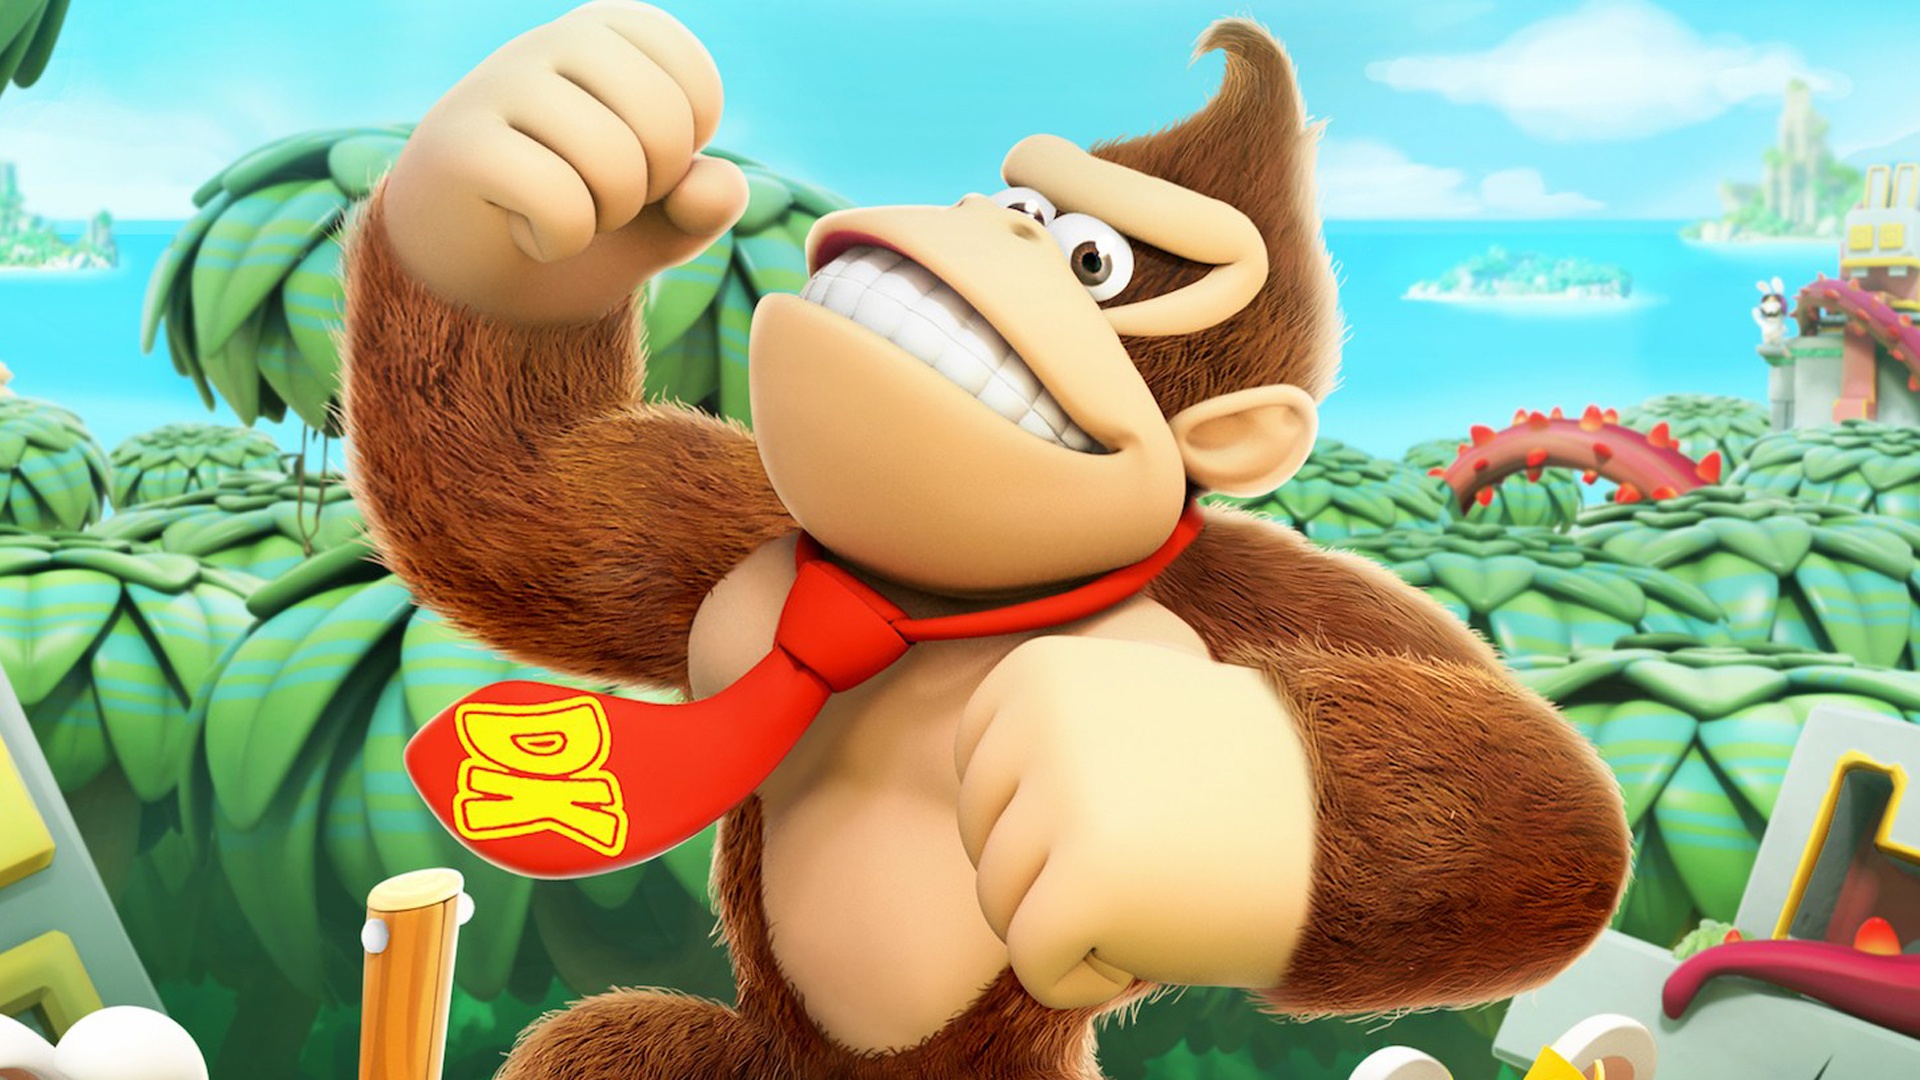 Mario + Rabbids Kingdom Battle Donkey Kong Adventure DLC - Nintendo Switch  [Digital Code] : Video Games 